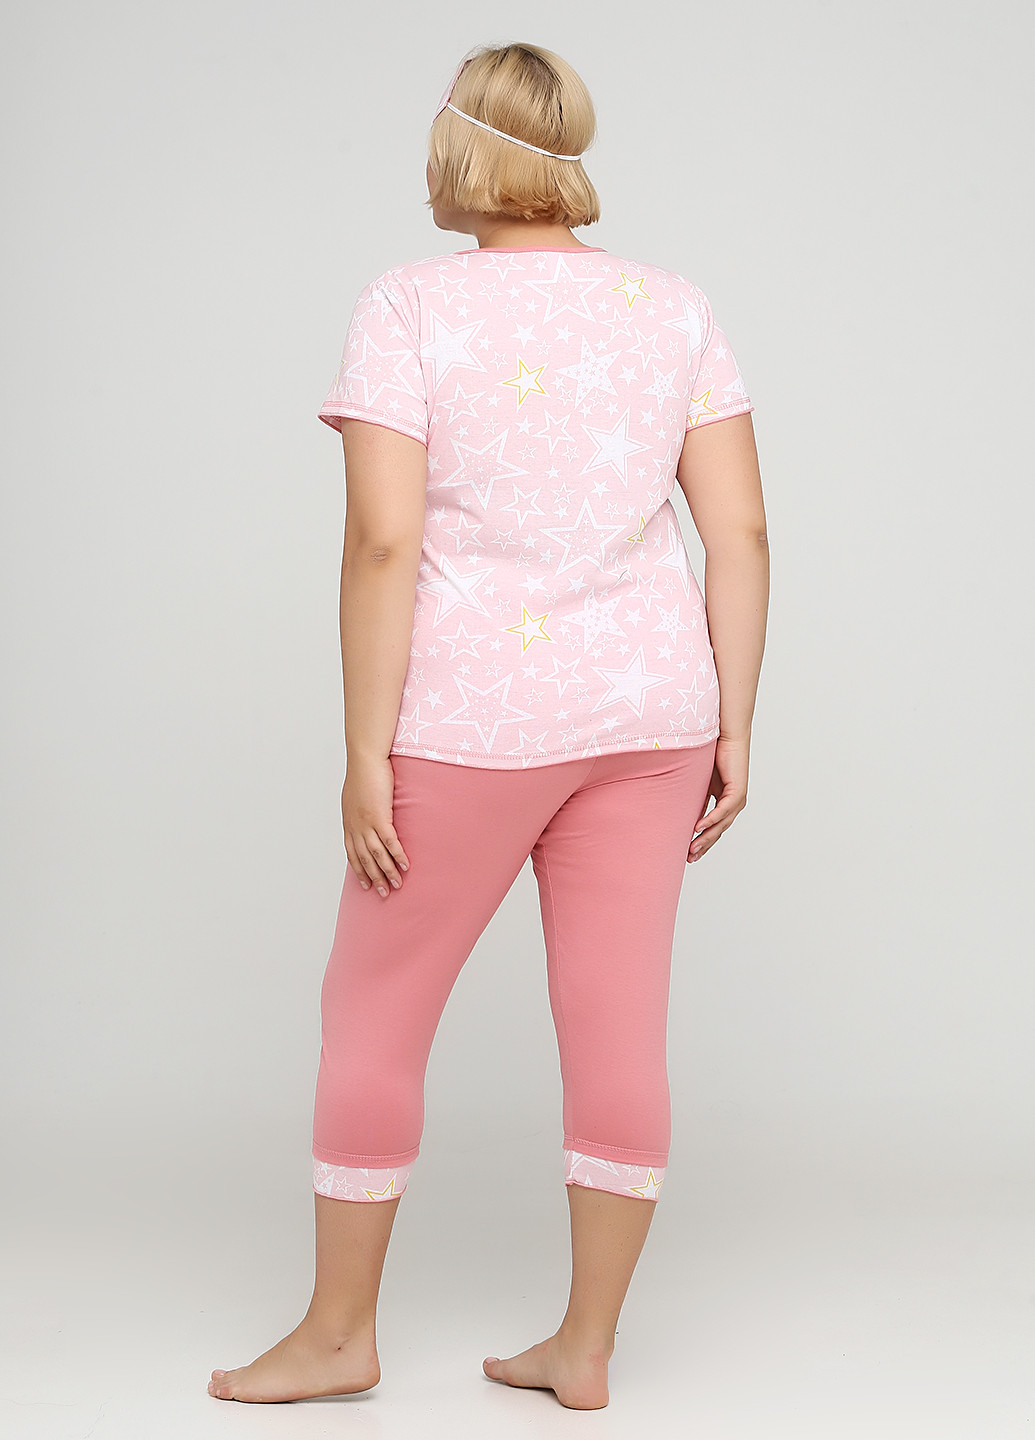 Розовая всесезон пижама (маска для сна, футболка, капри) футболка + капри Трикомир